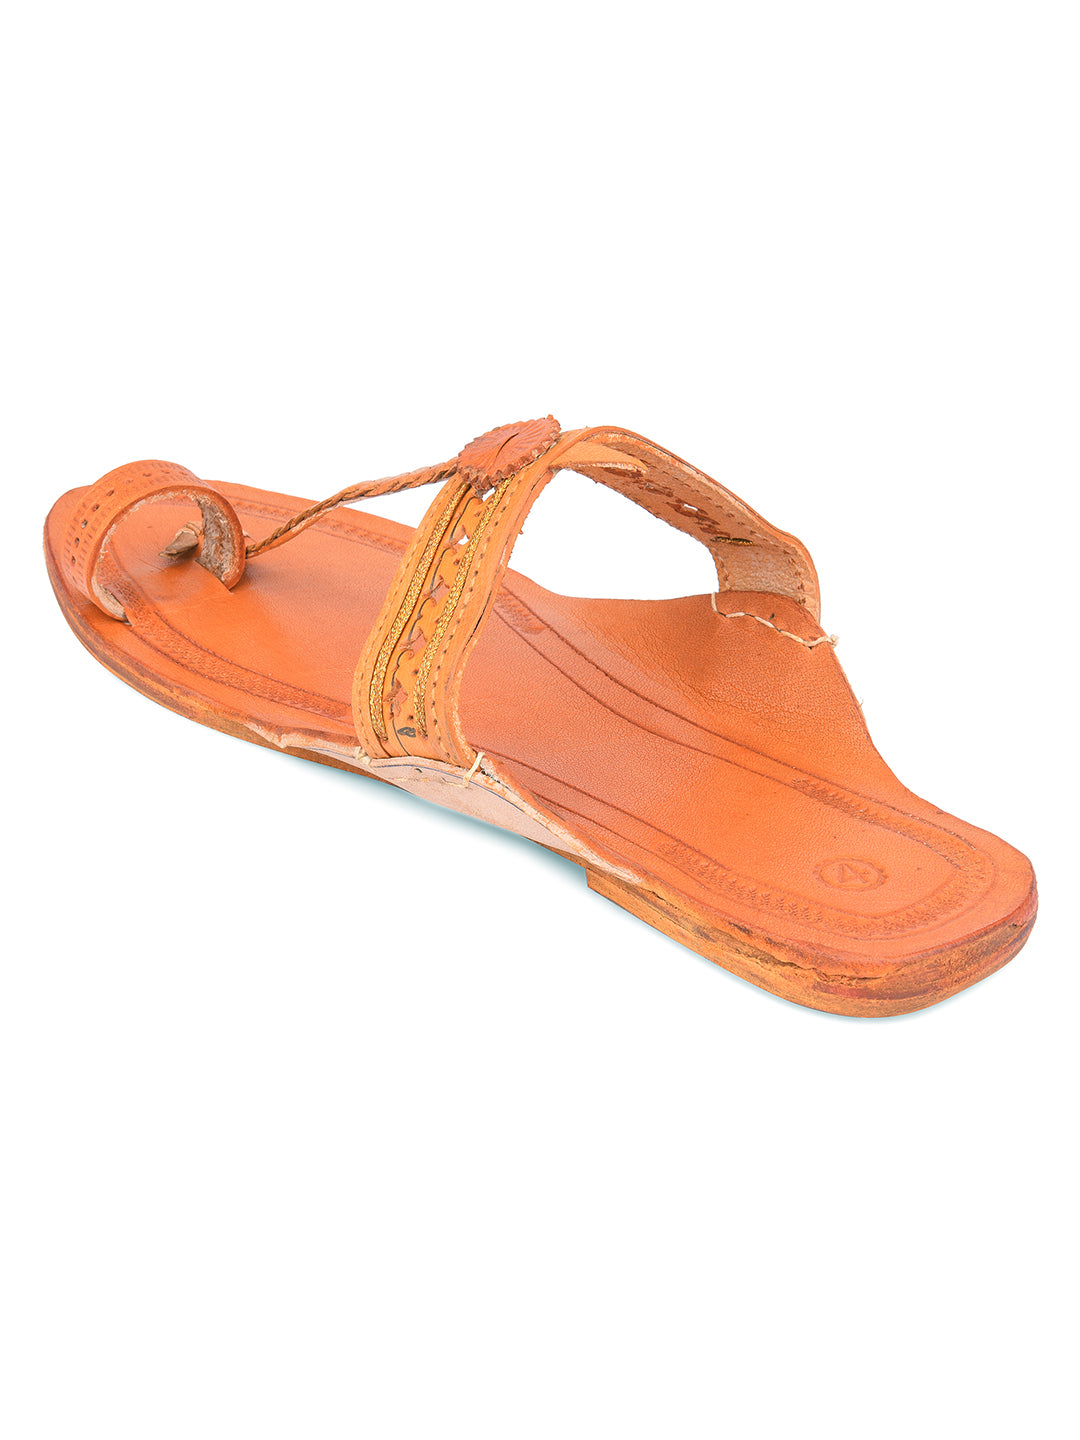 DESI COLOUR Tan Leather Wedge Sandals